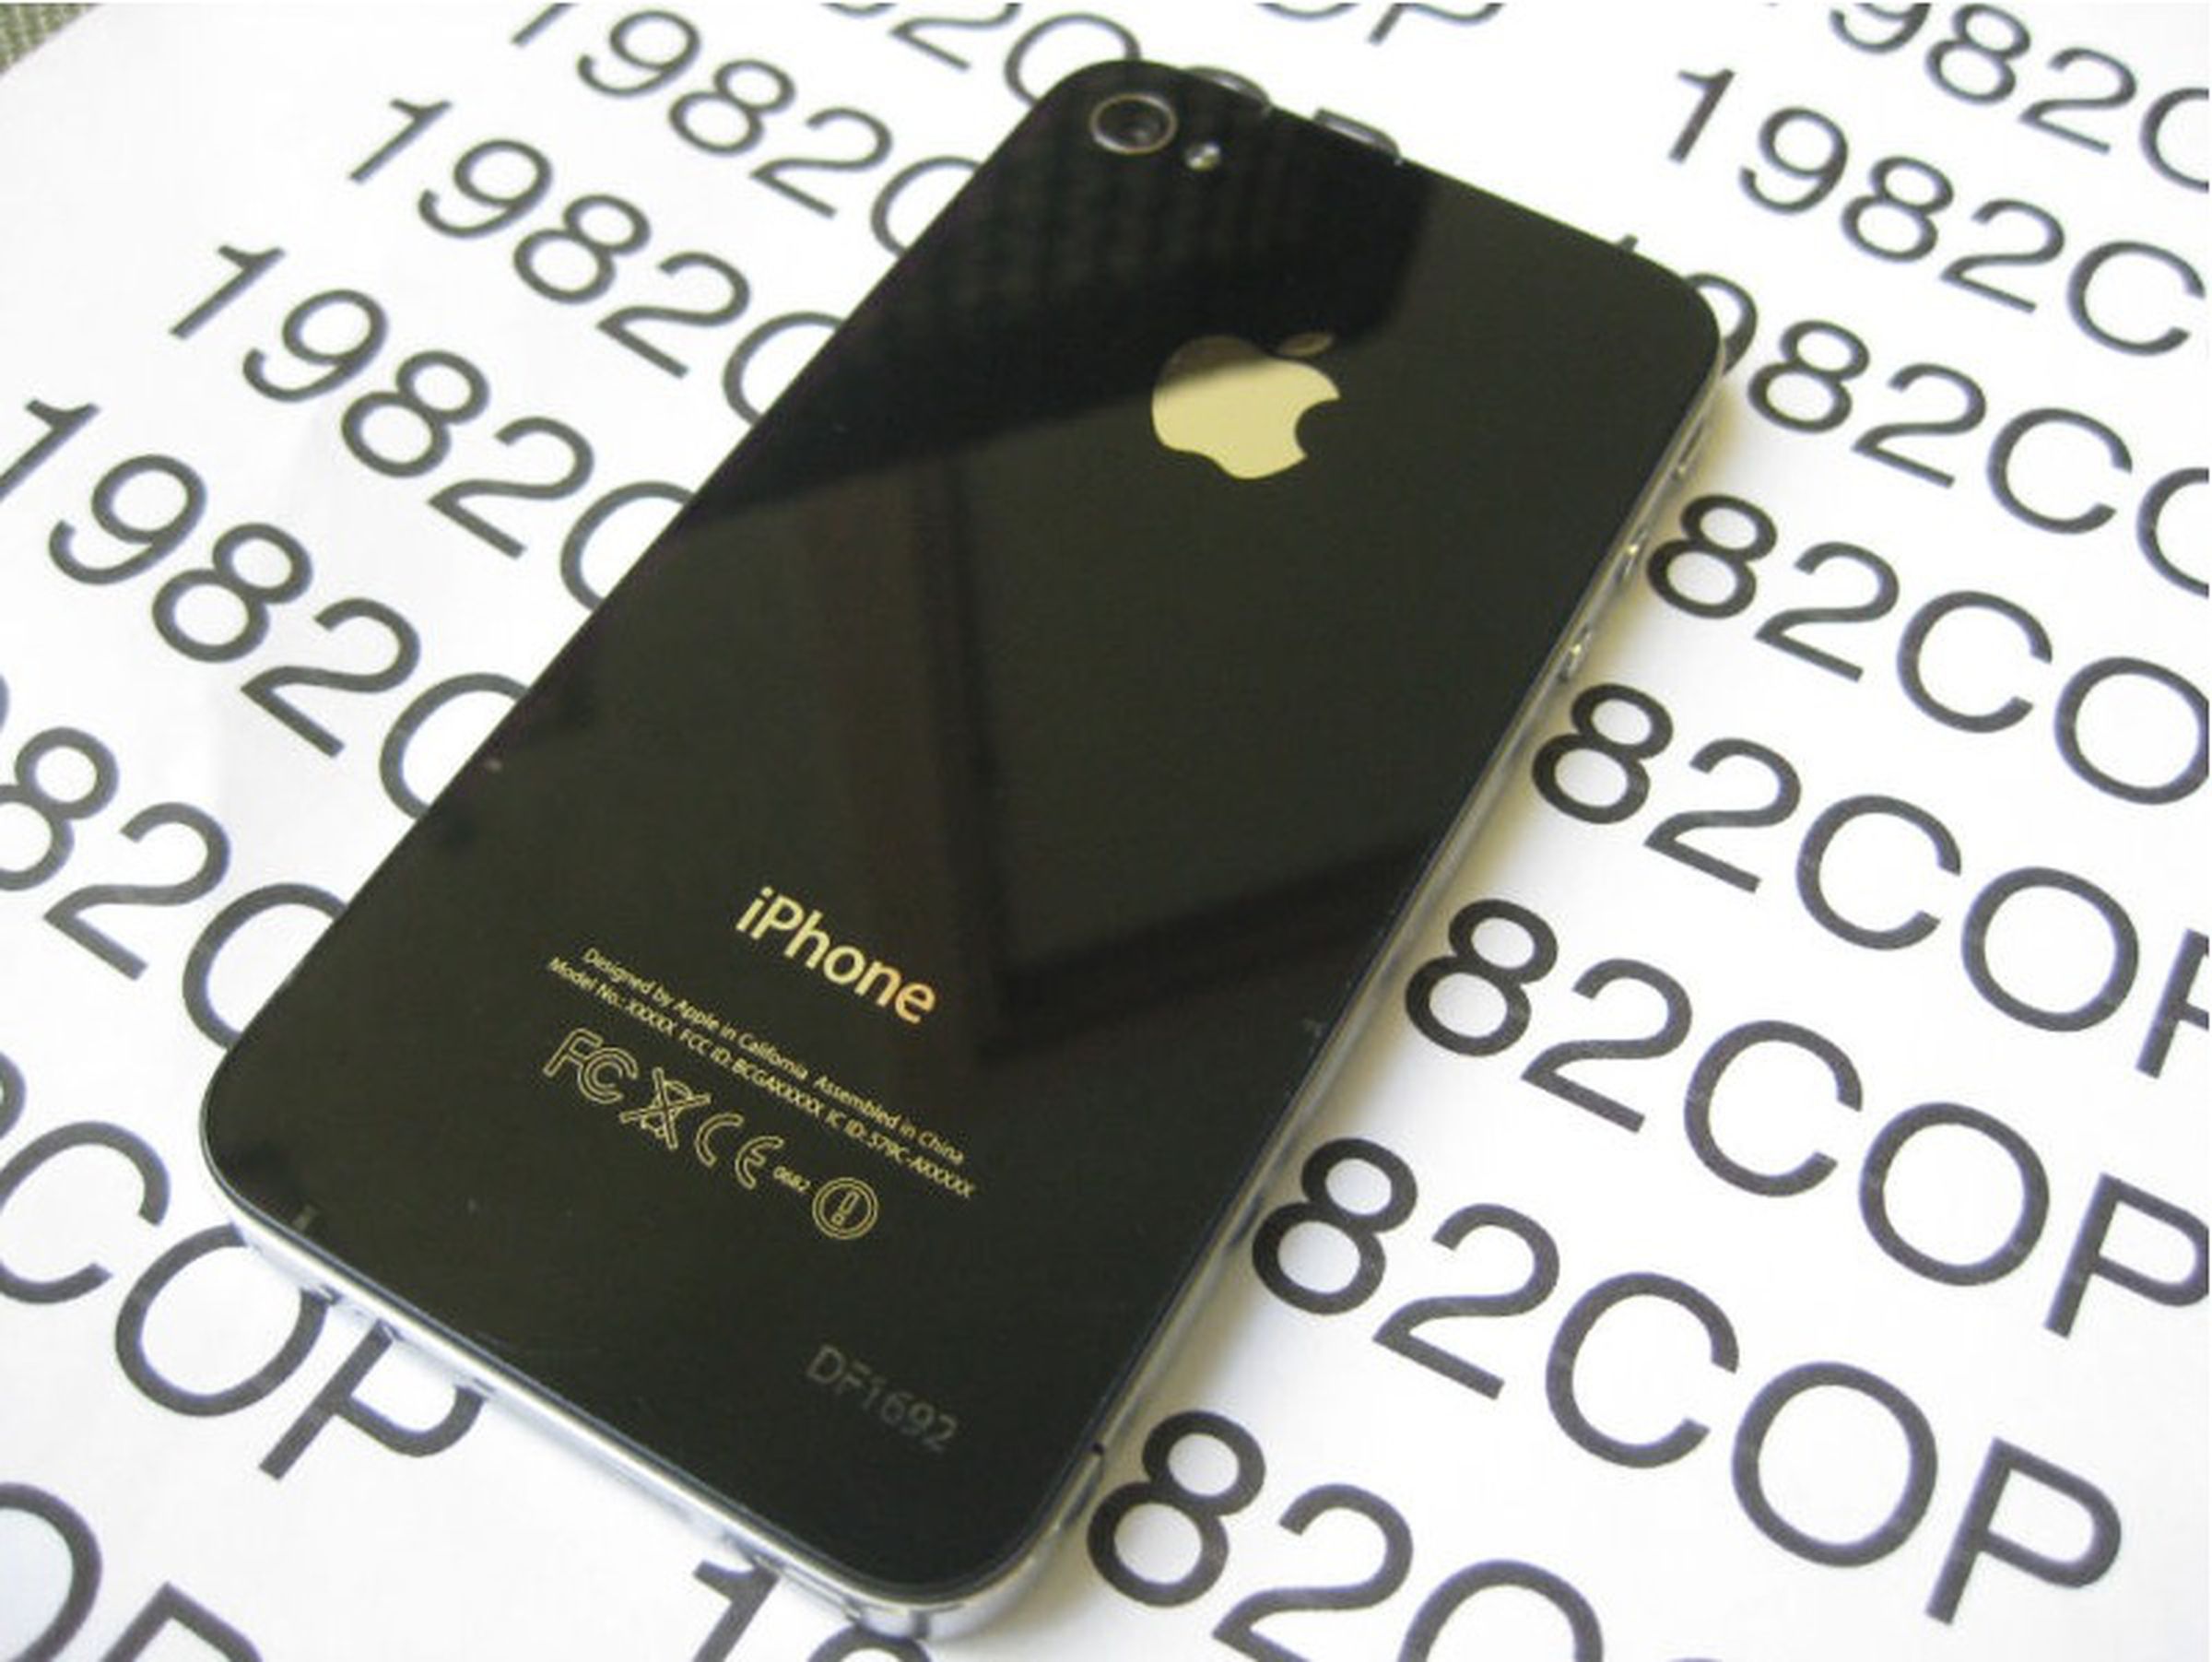 iPhone 4 prototype appears on eBay 